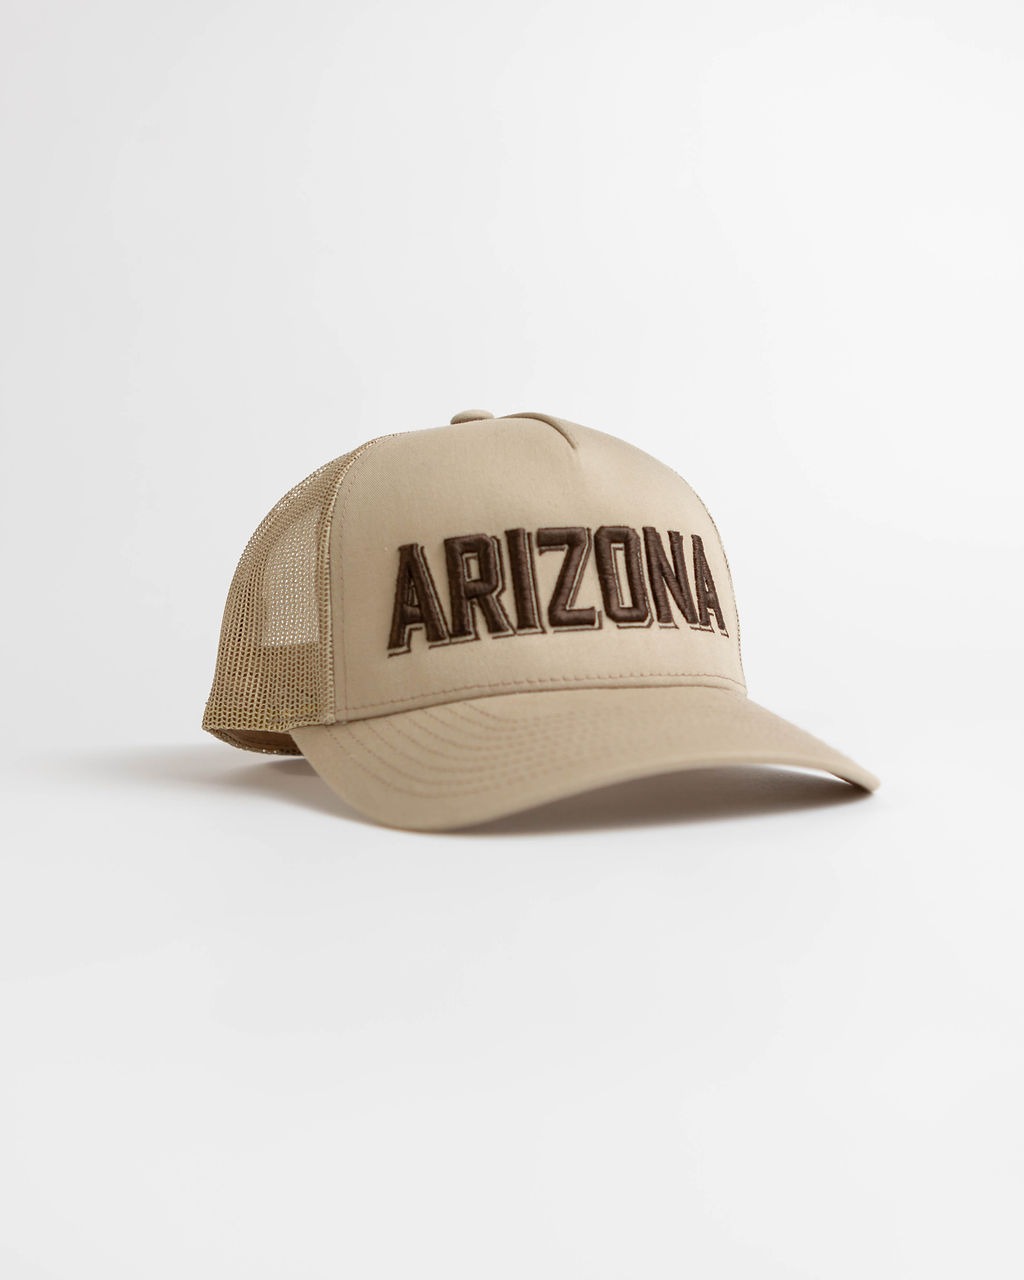 Arizona Embroidered Cap - Tan